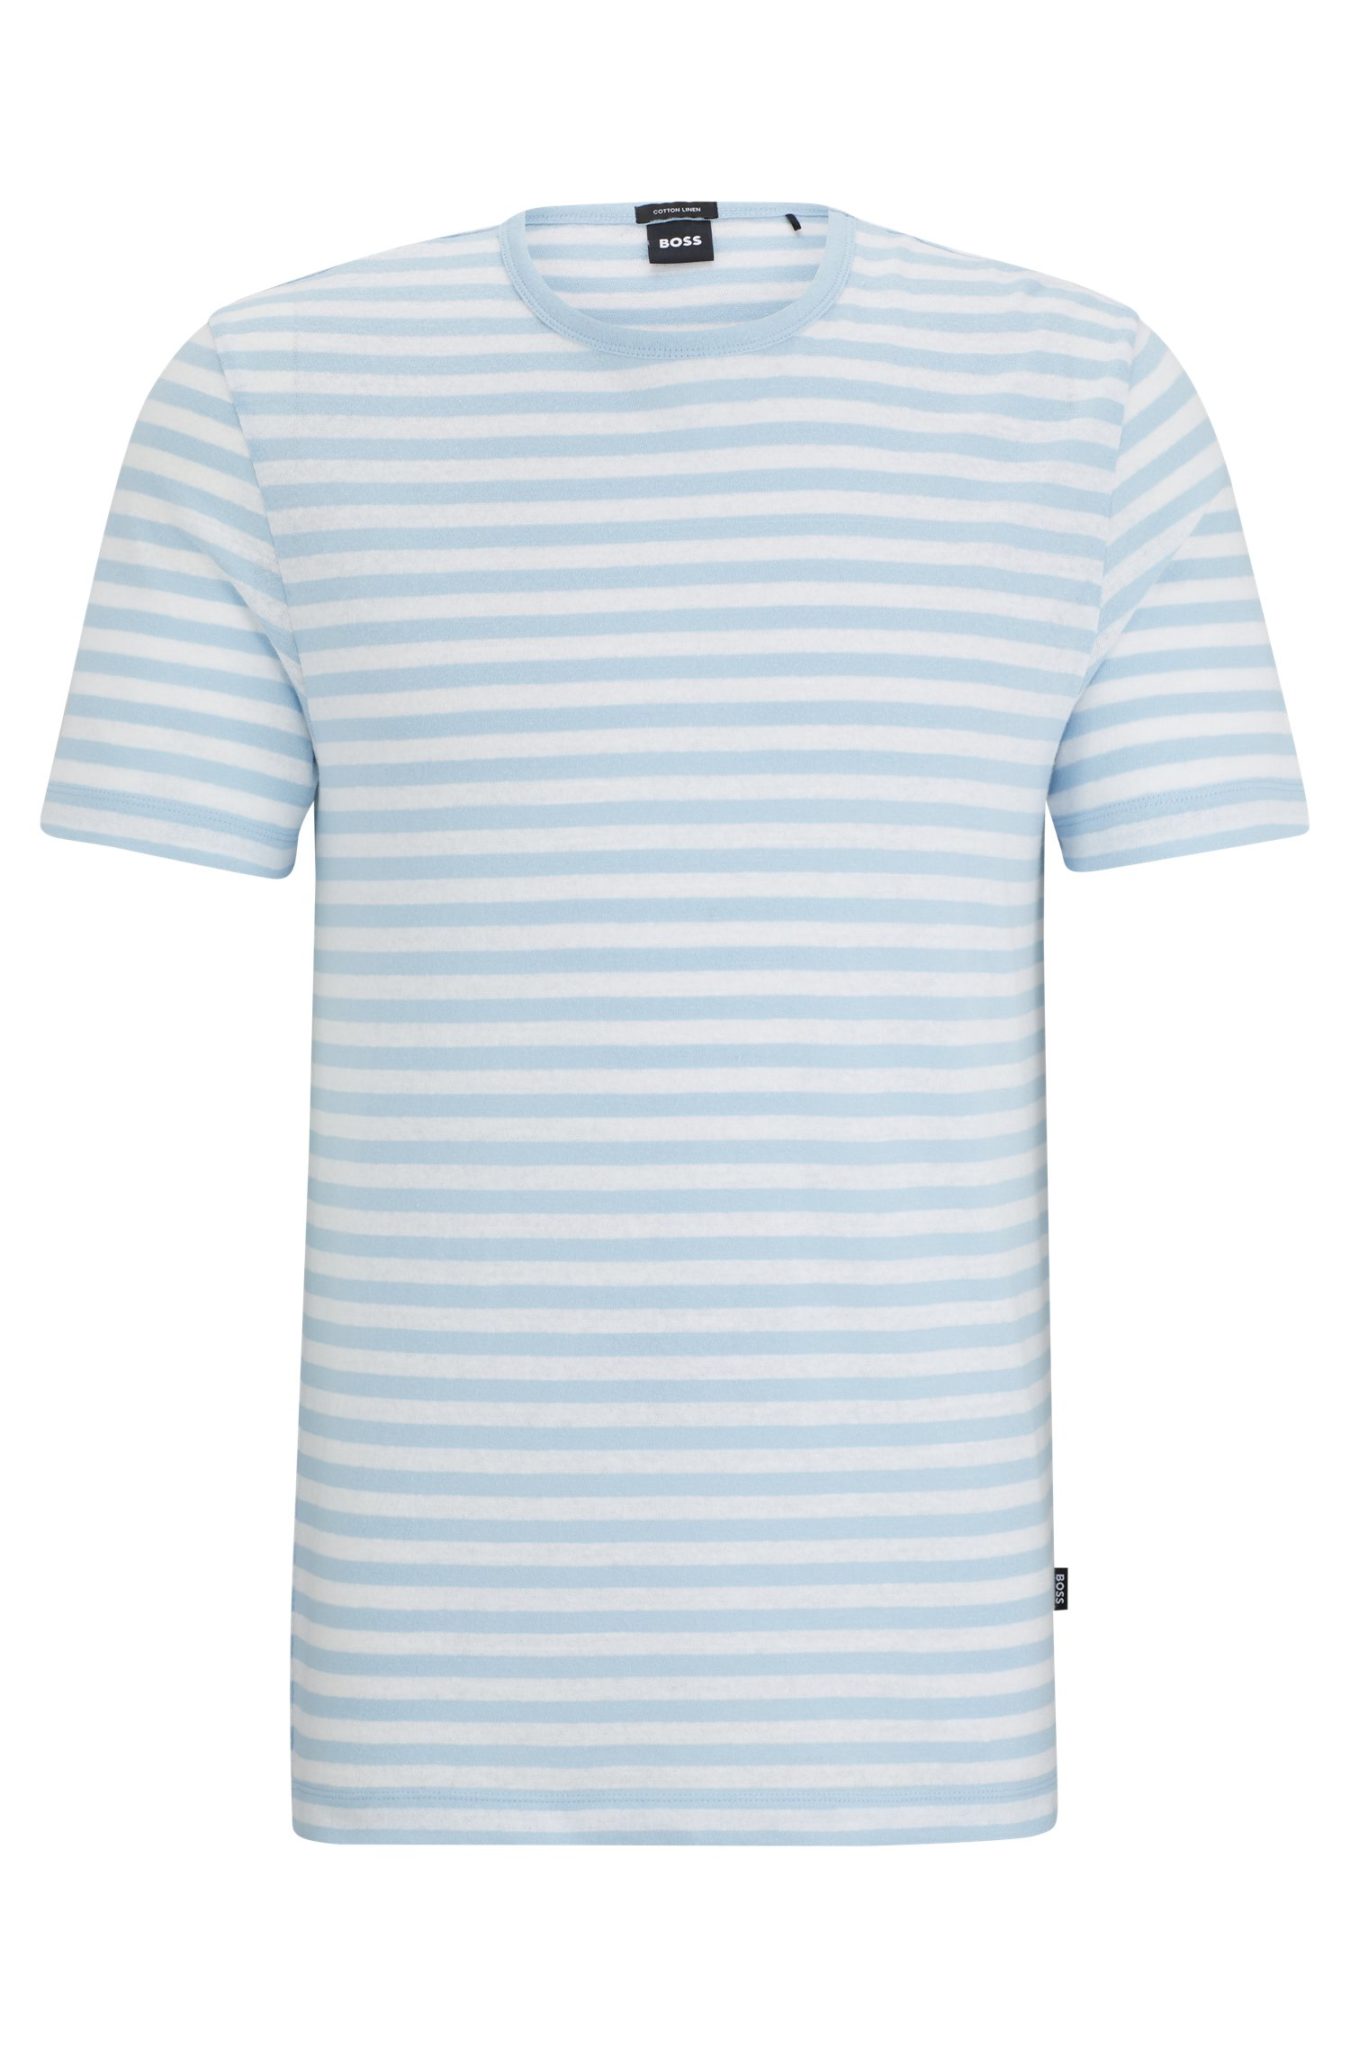 Hugo Boss T-shirt en coton et lin à rayures horizontales